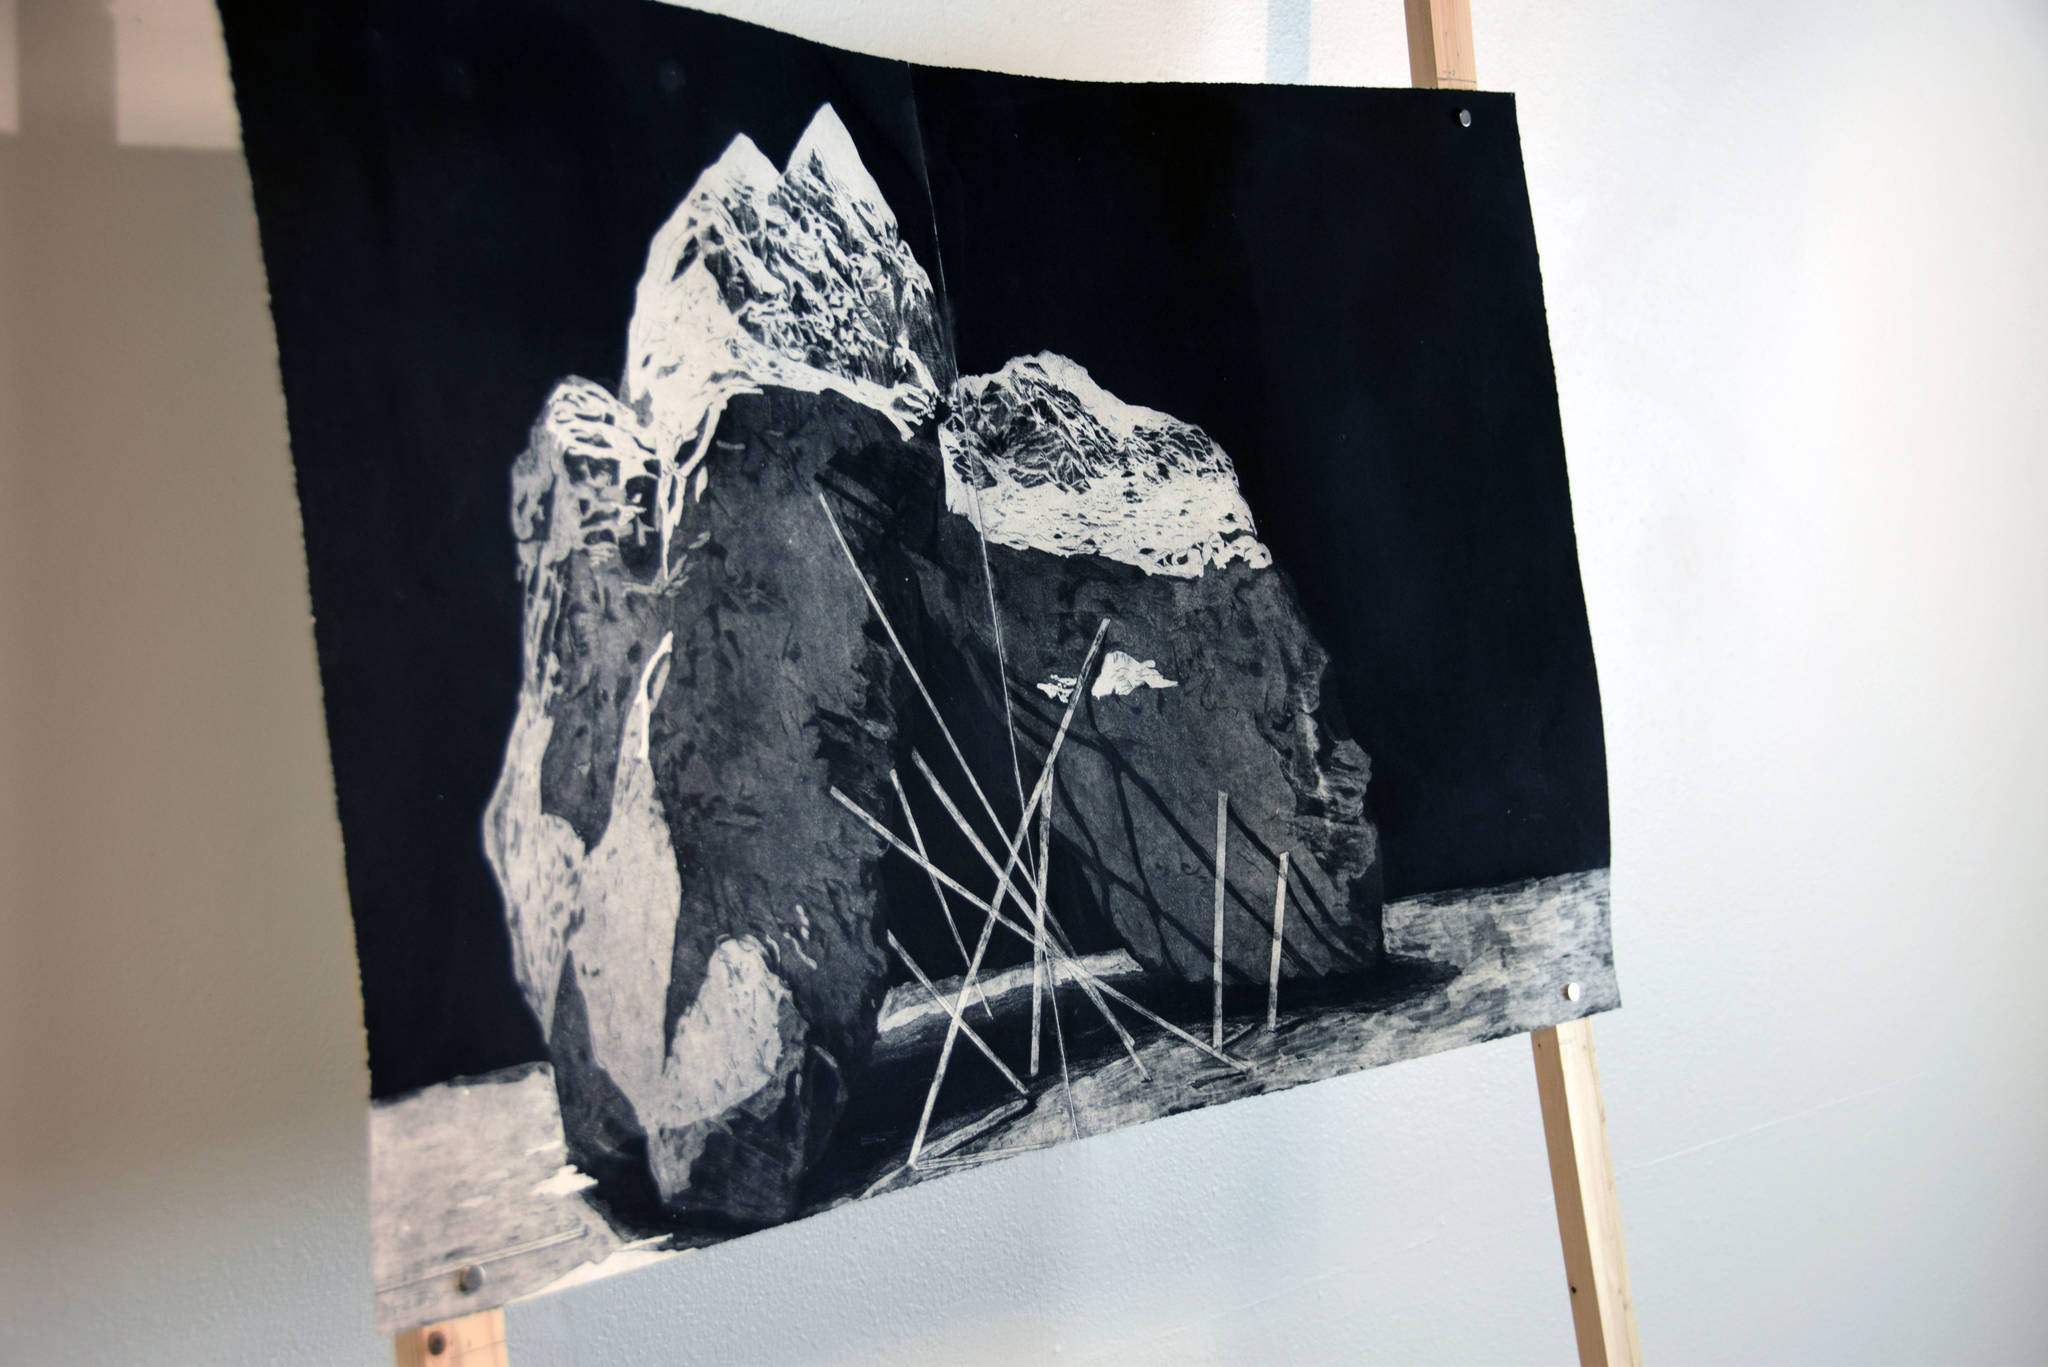 The work of Anchorage artist Jonathan Green is on display at the Kenai Fine Art Center in Kenai, Alaska, on Monday, April 29, 2019. (Photo by Brian Mazurek/Peninsula Clarion)